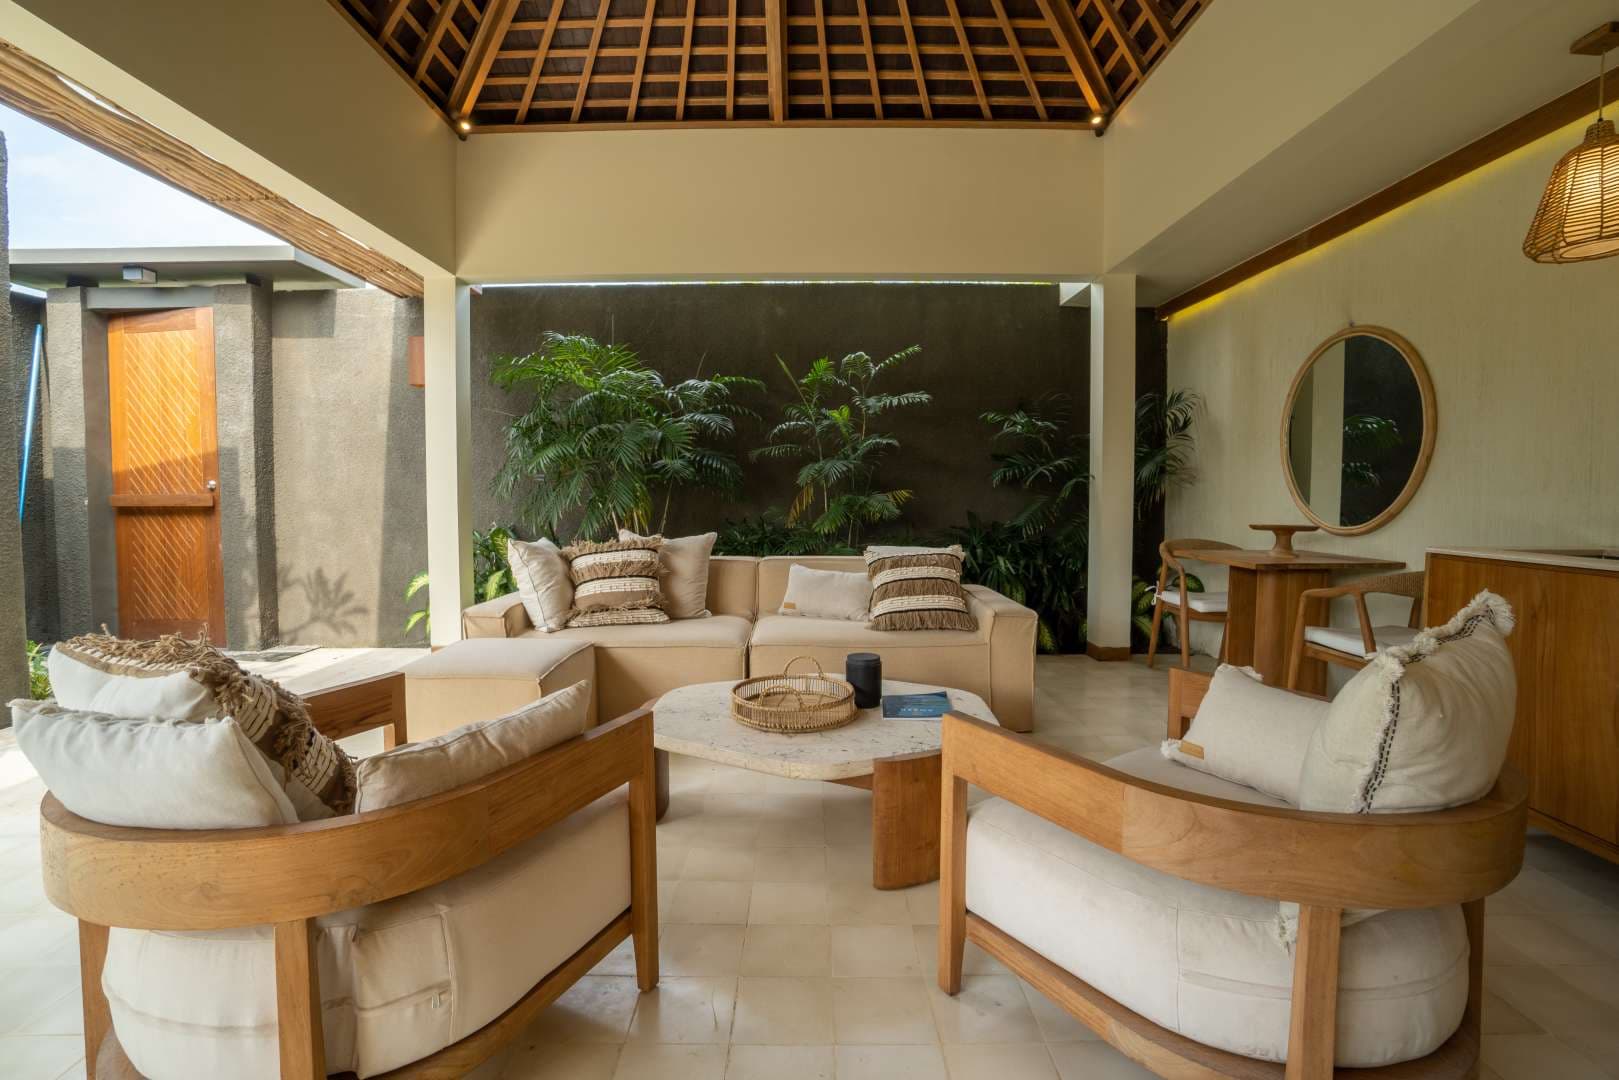 1 Bedroom Villa For Sale Bali Lp08536 2cd4f3b5fbe77000.jpg